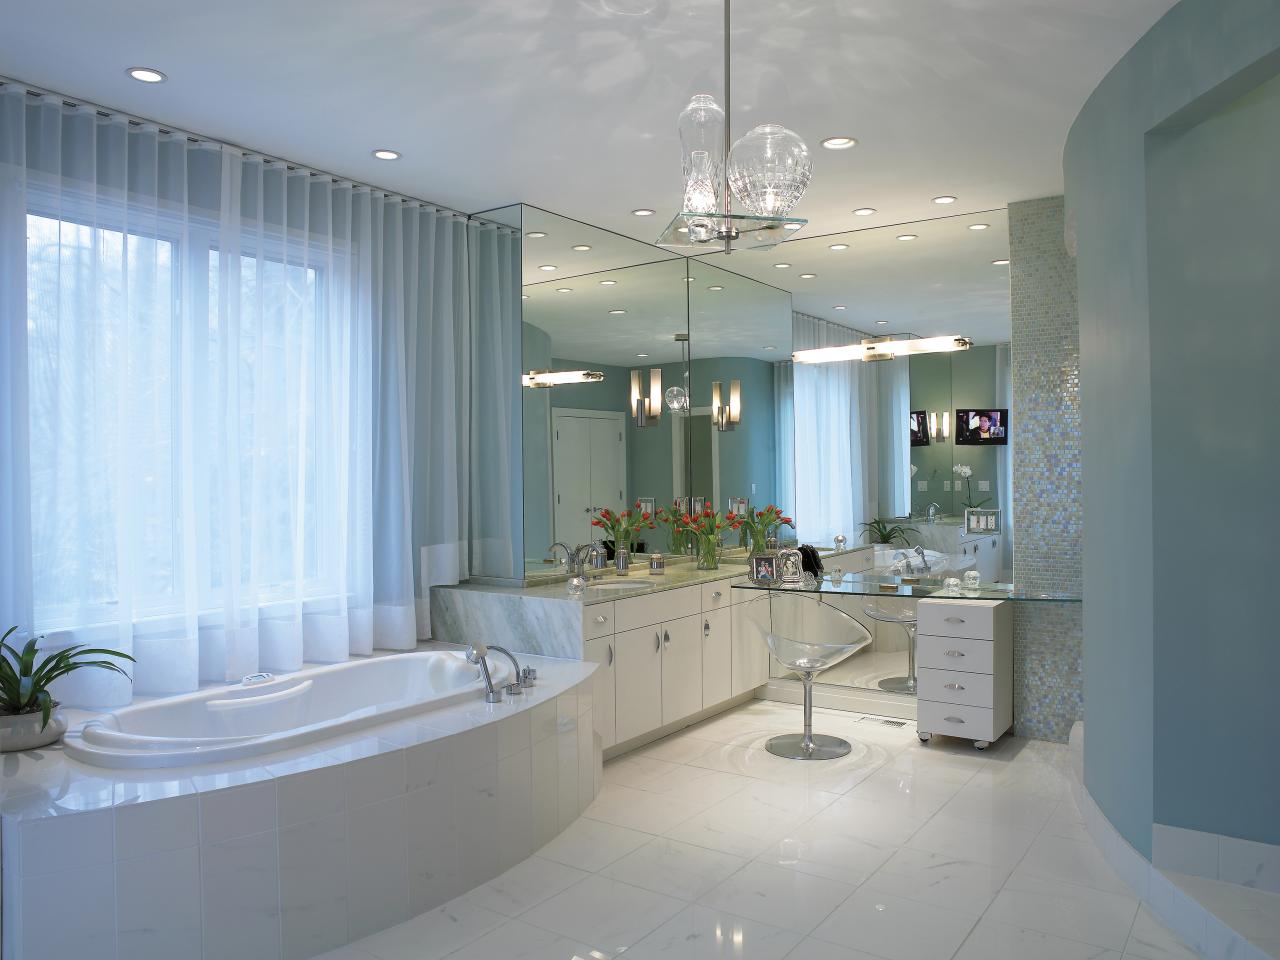 Choosing a Bathroom Layout | Bathroom Design - Choose Floor Plan ...